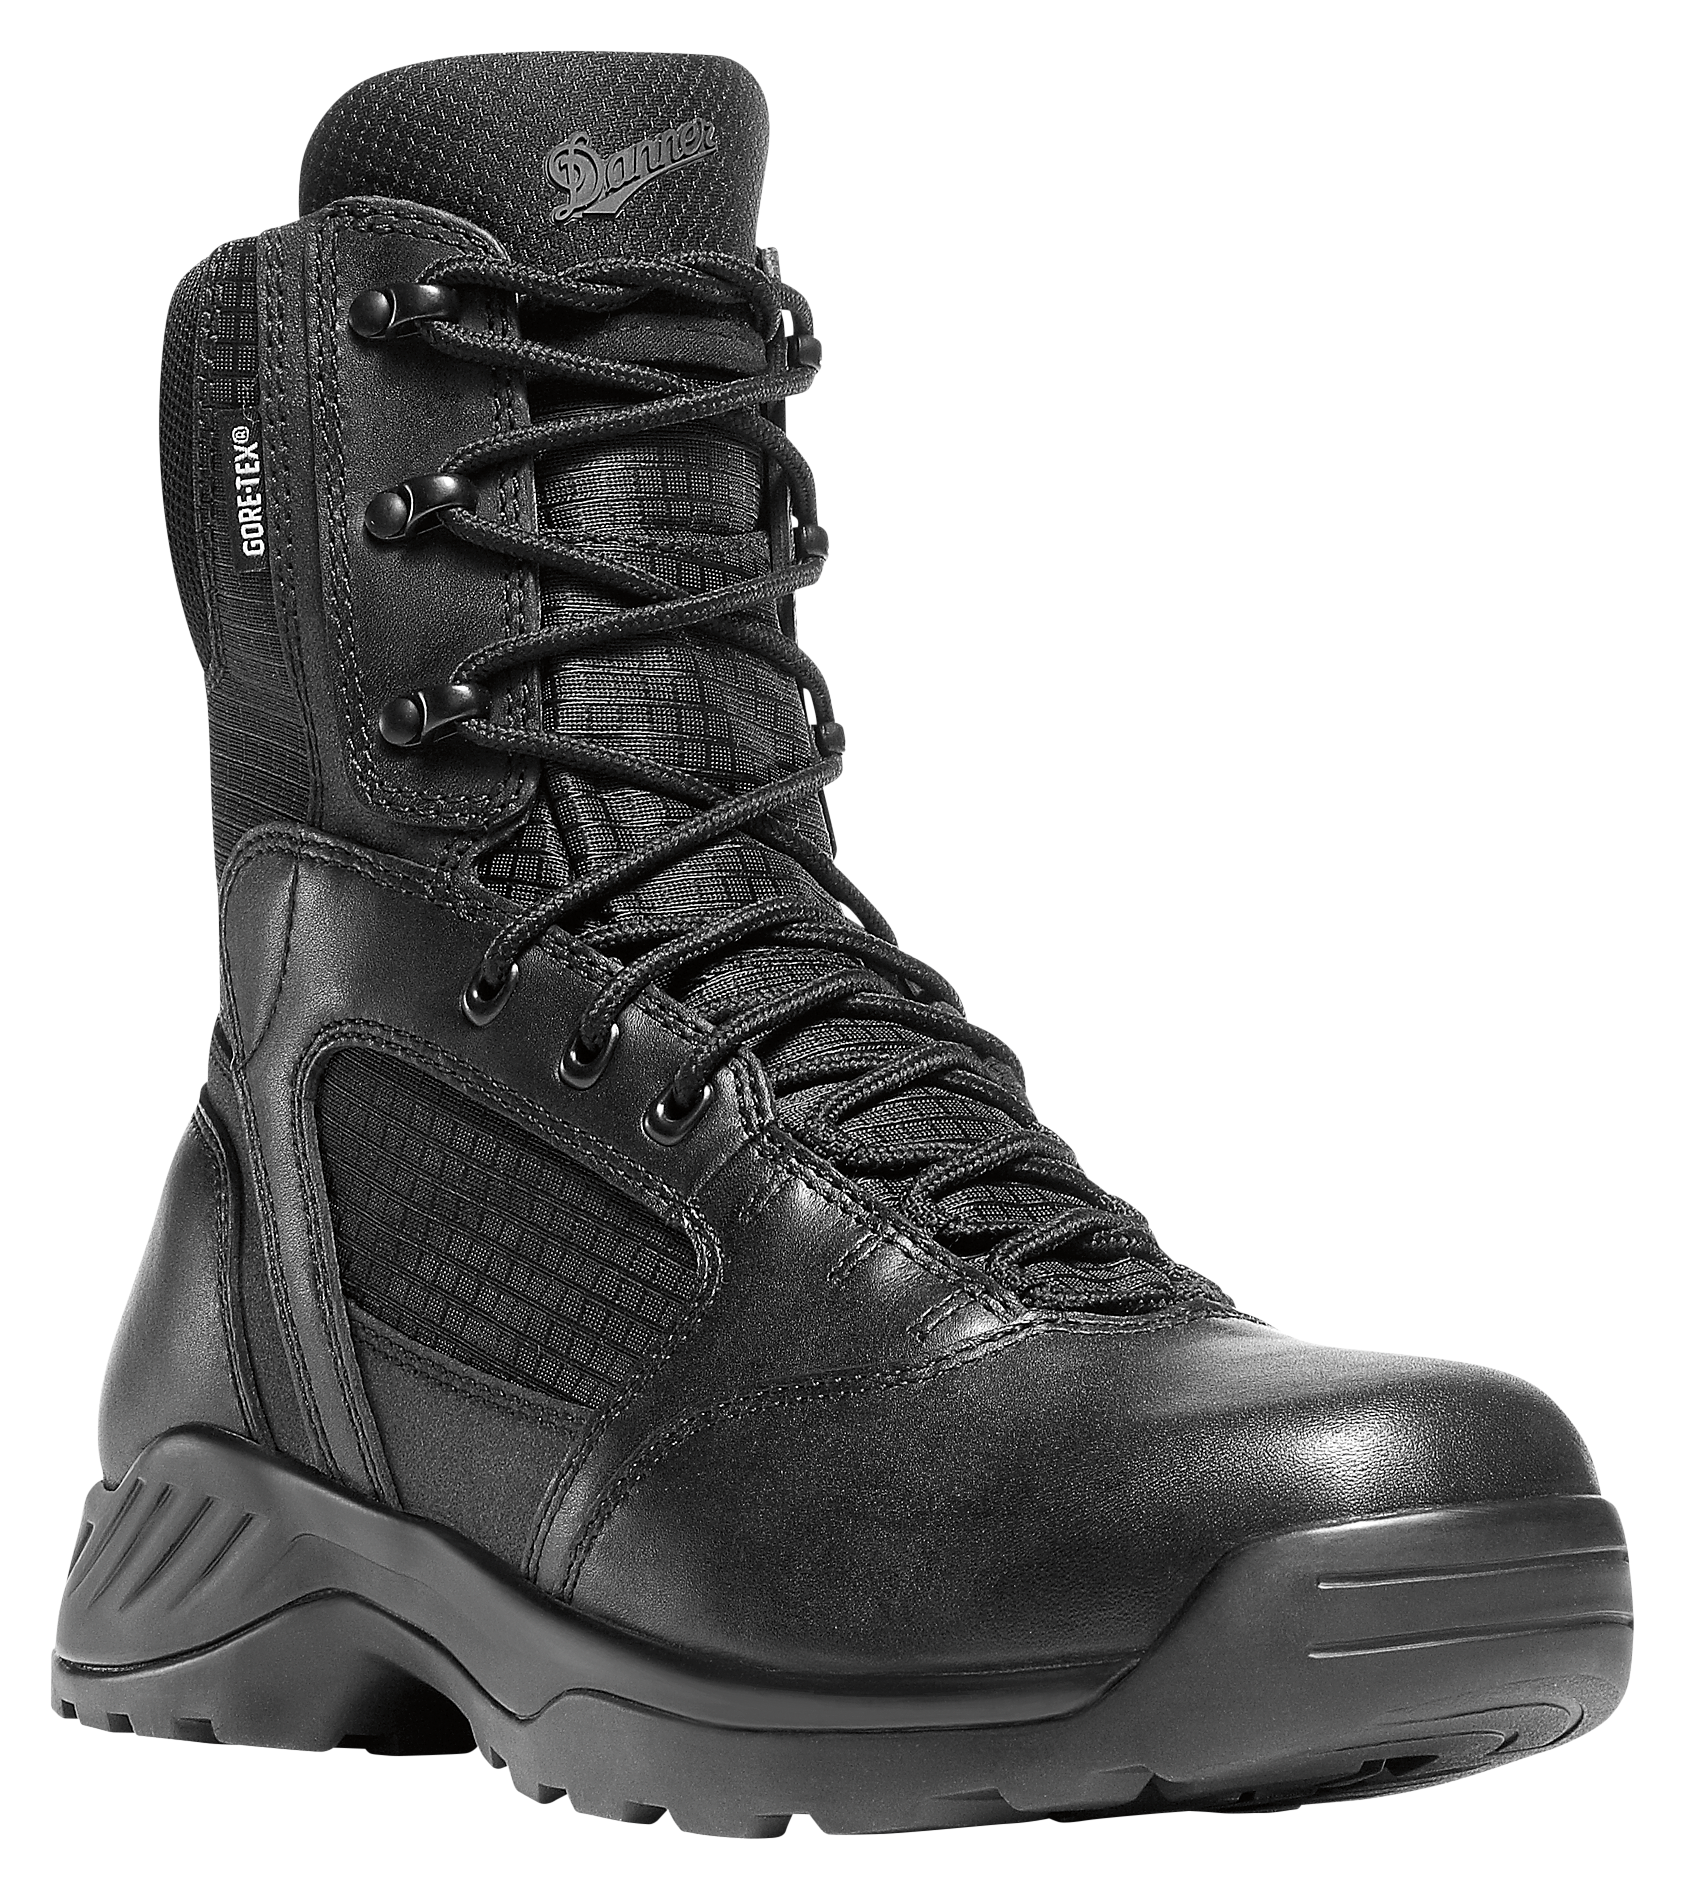 Danner Kinetic GTX Side-Zip Waterproof Tactical Duty Boots for Men - Black - 11W